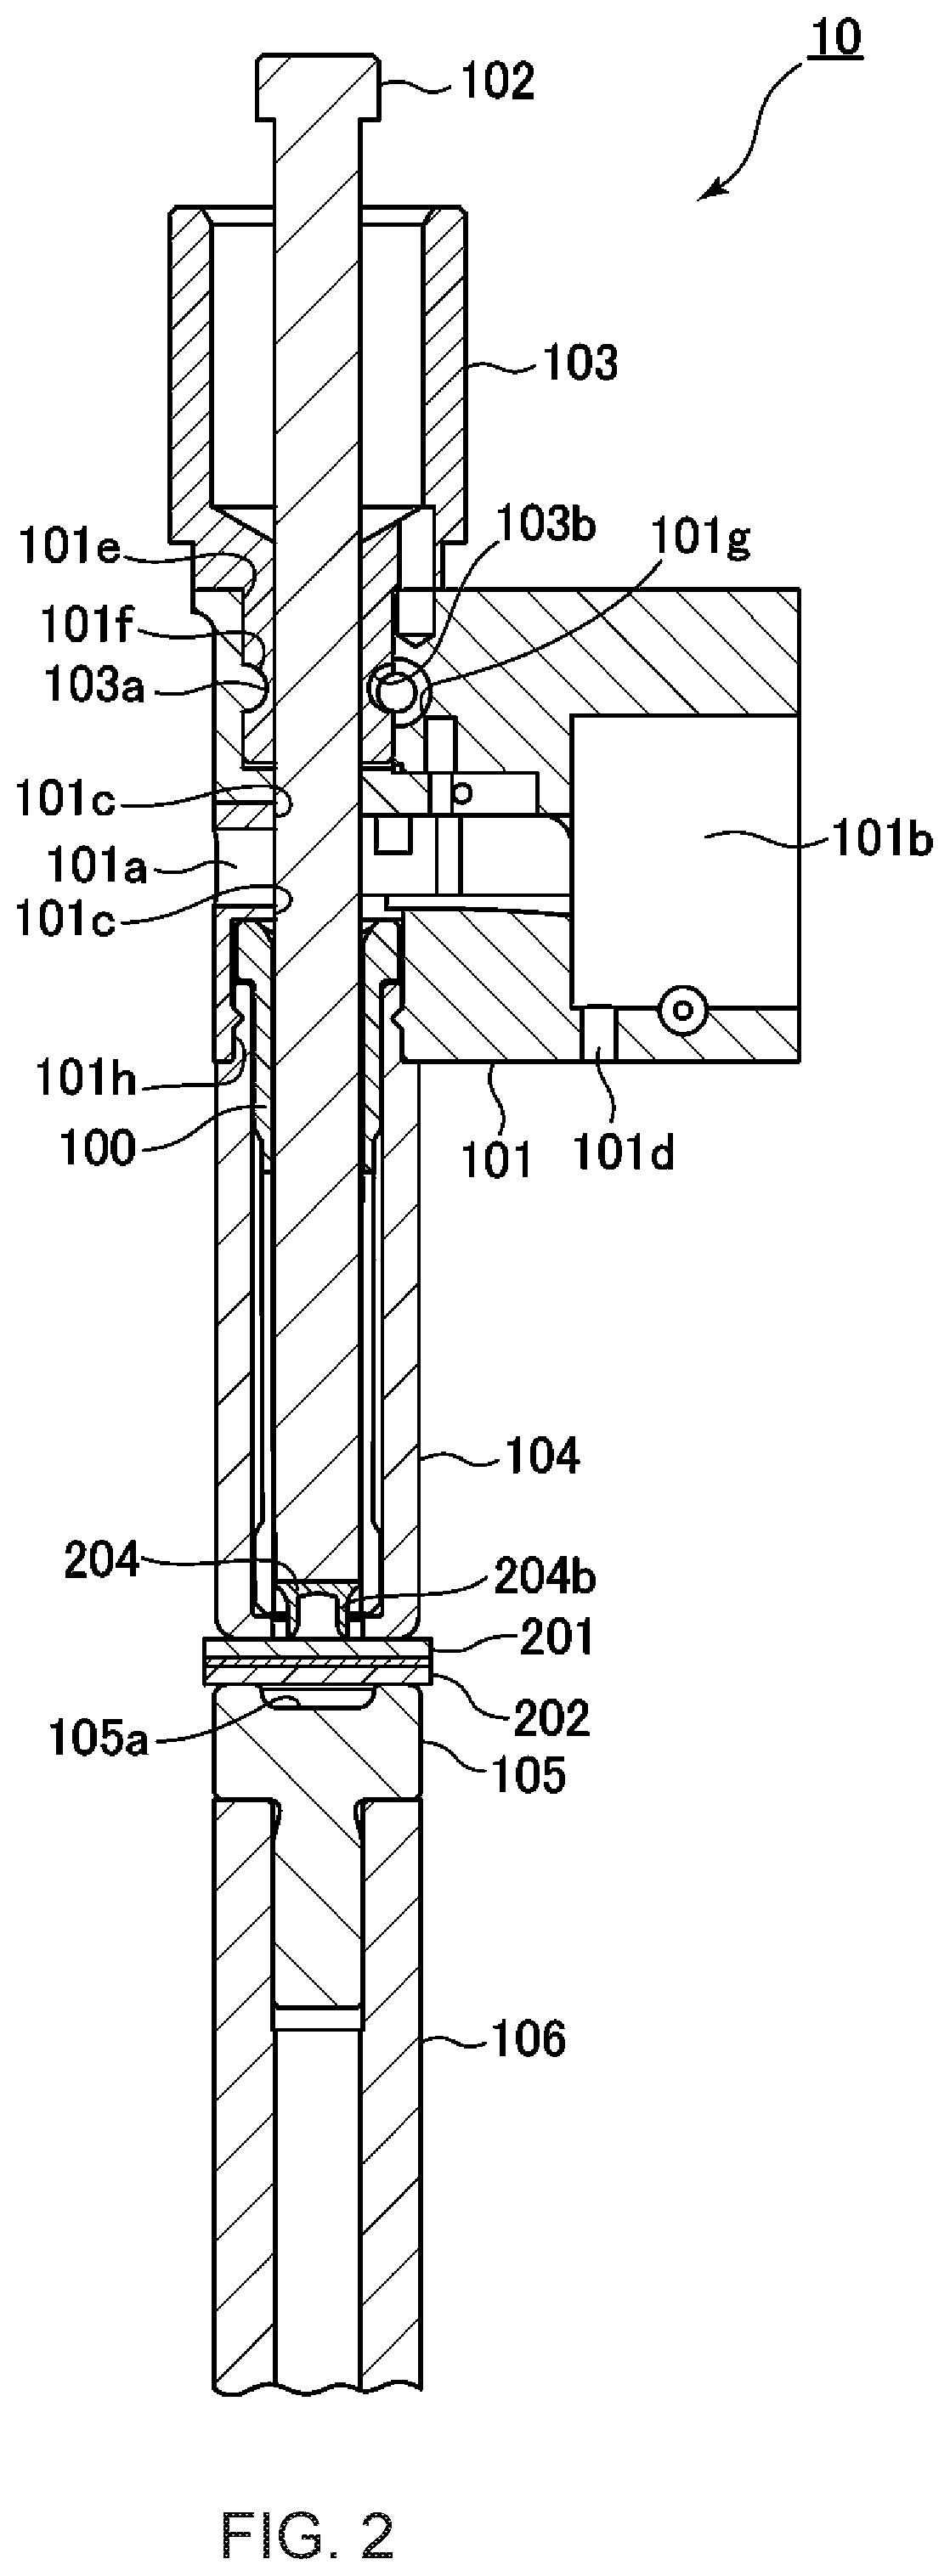 Self-piercing rivet fastening device